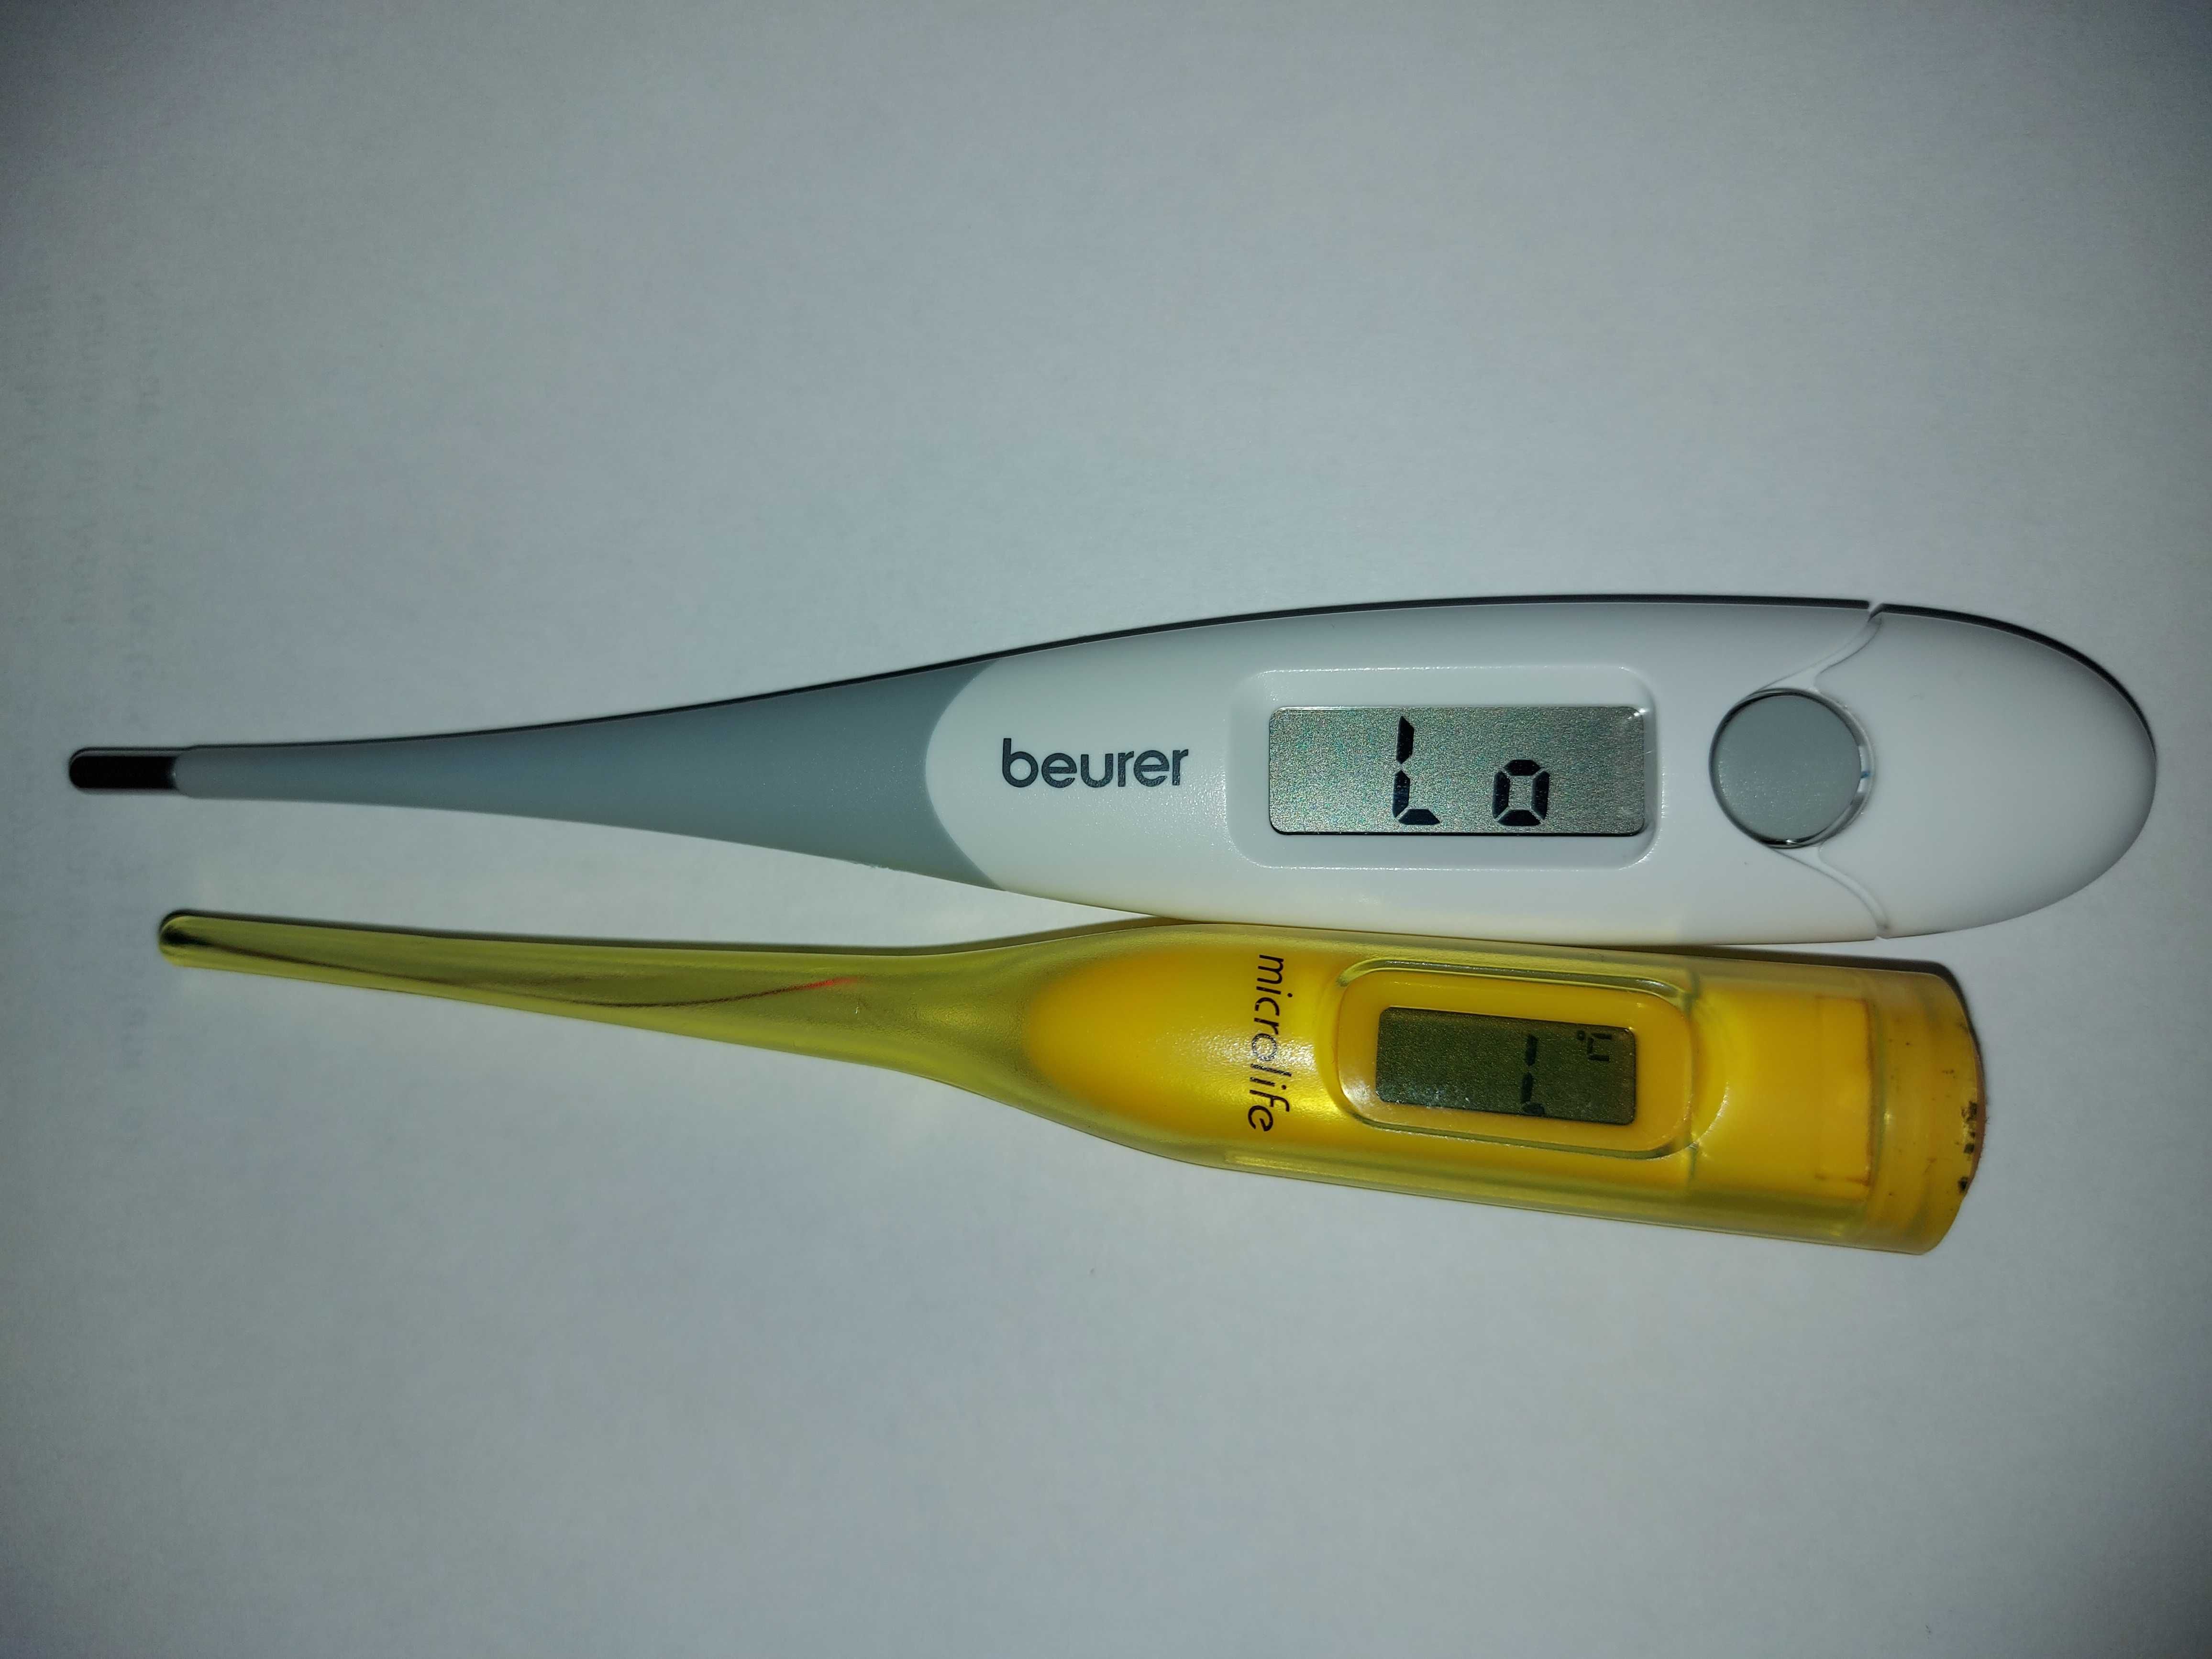 Vand doua termometre electronice Beurer + Microlife (folosite)